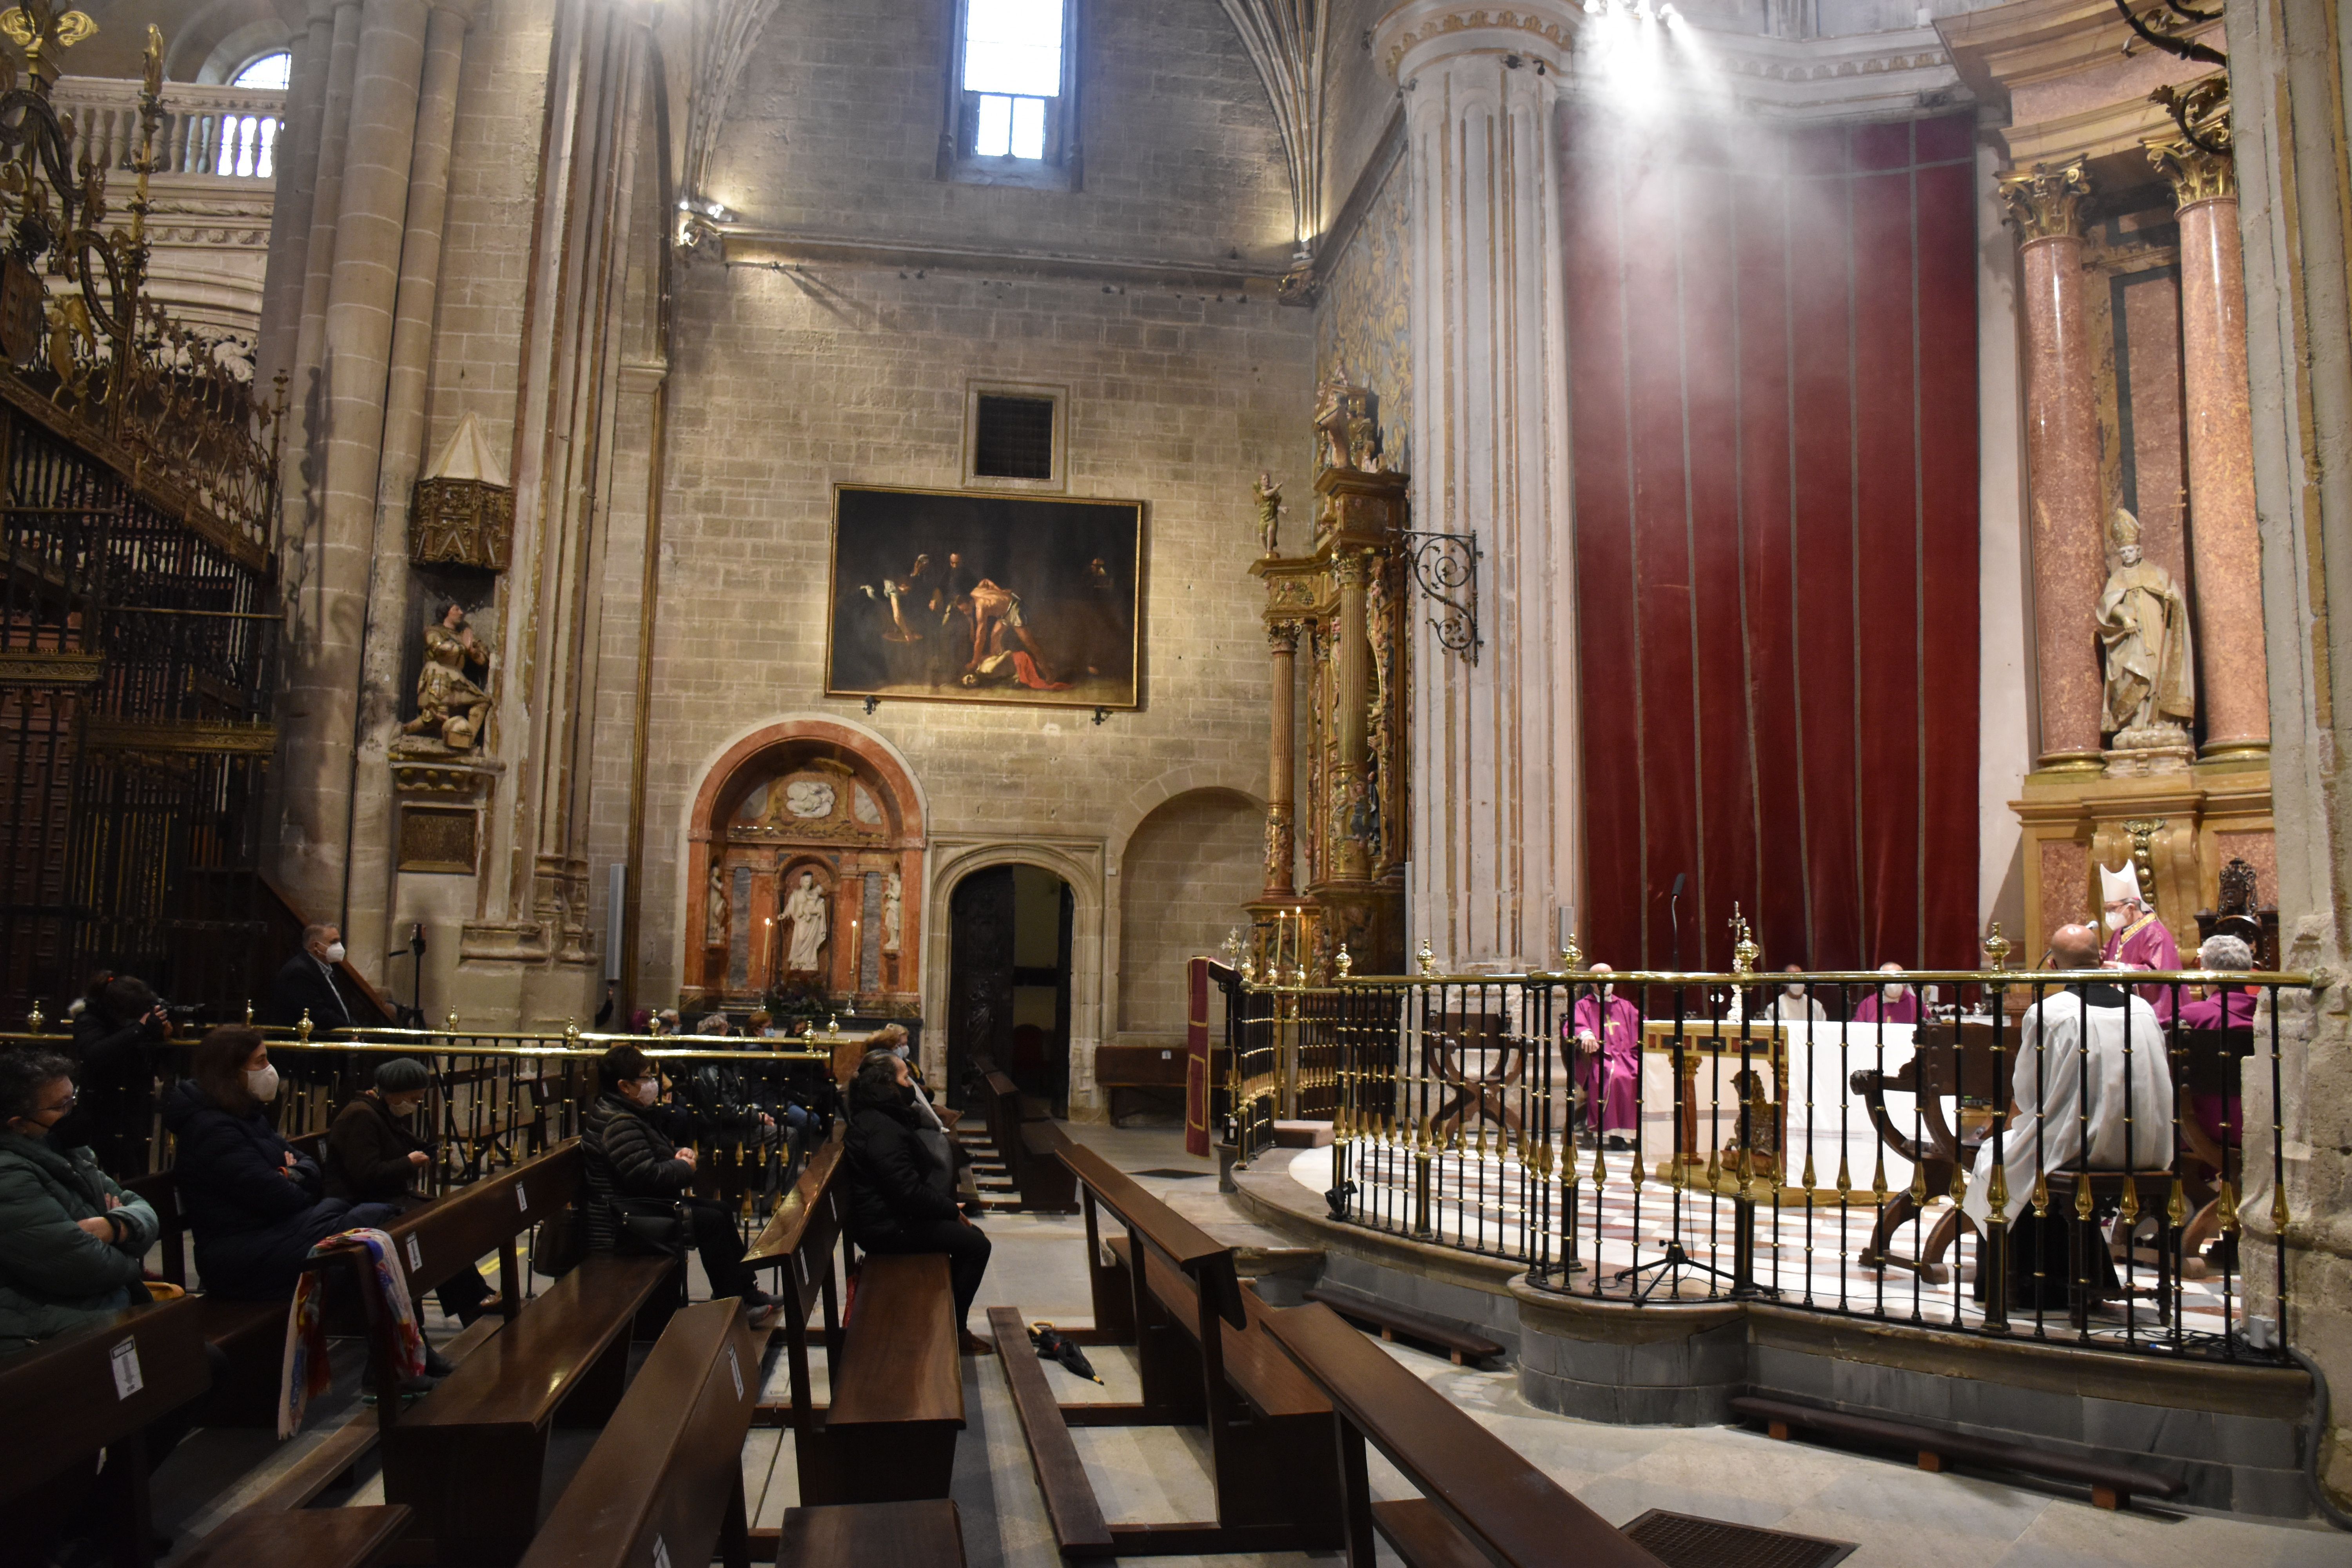 El obispo de Zamora, Fernando Valera, preside la eucaristía del Miércoles de Ceniza en la Catedral